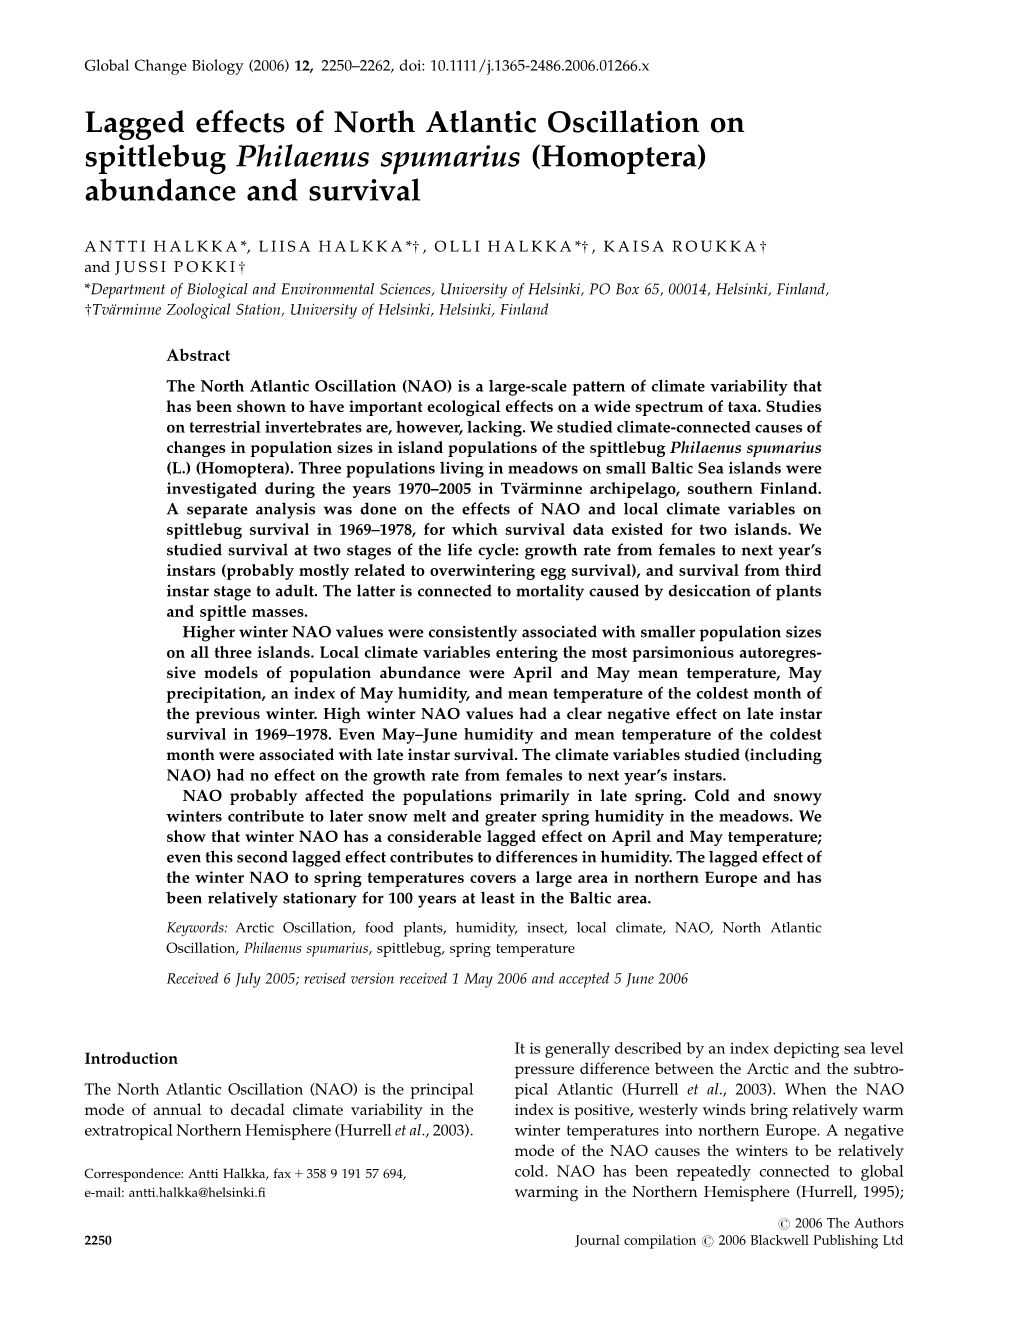 Lagged Effects of North Atlantic Oscillation on Spittlebug Philaenus Spumarius (Homoptera) Abundance and Survival